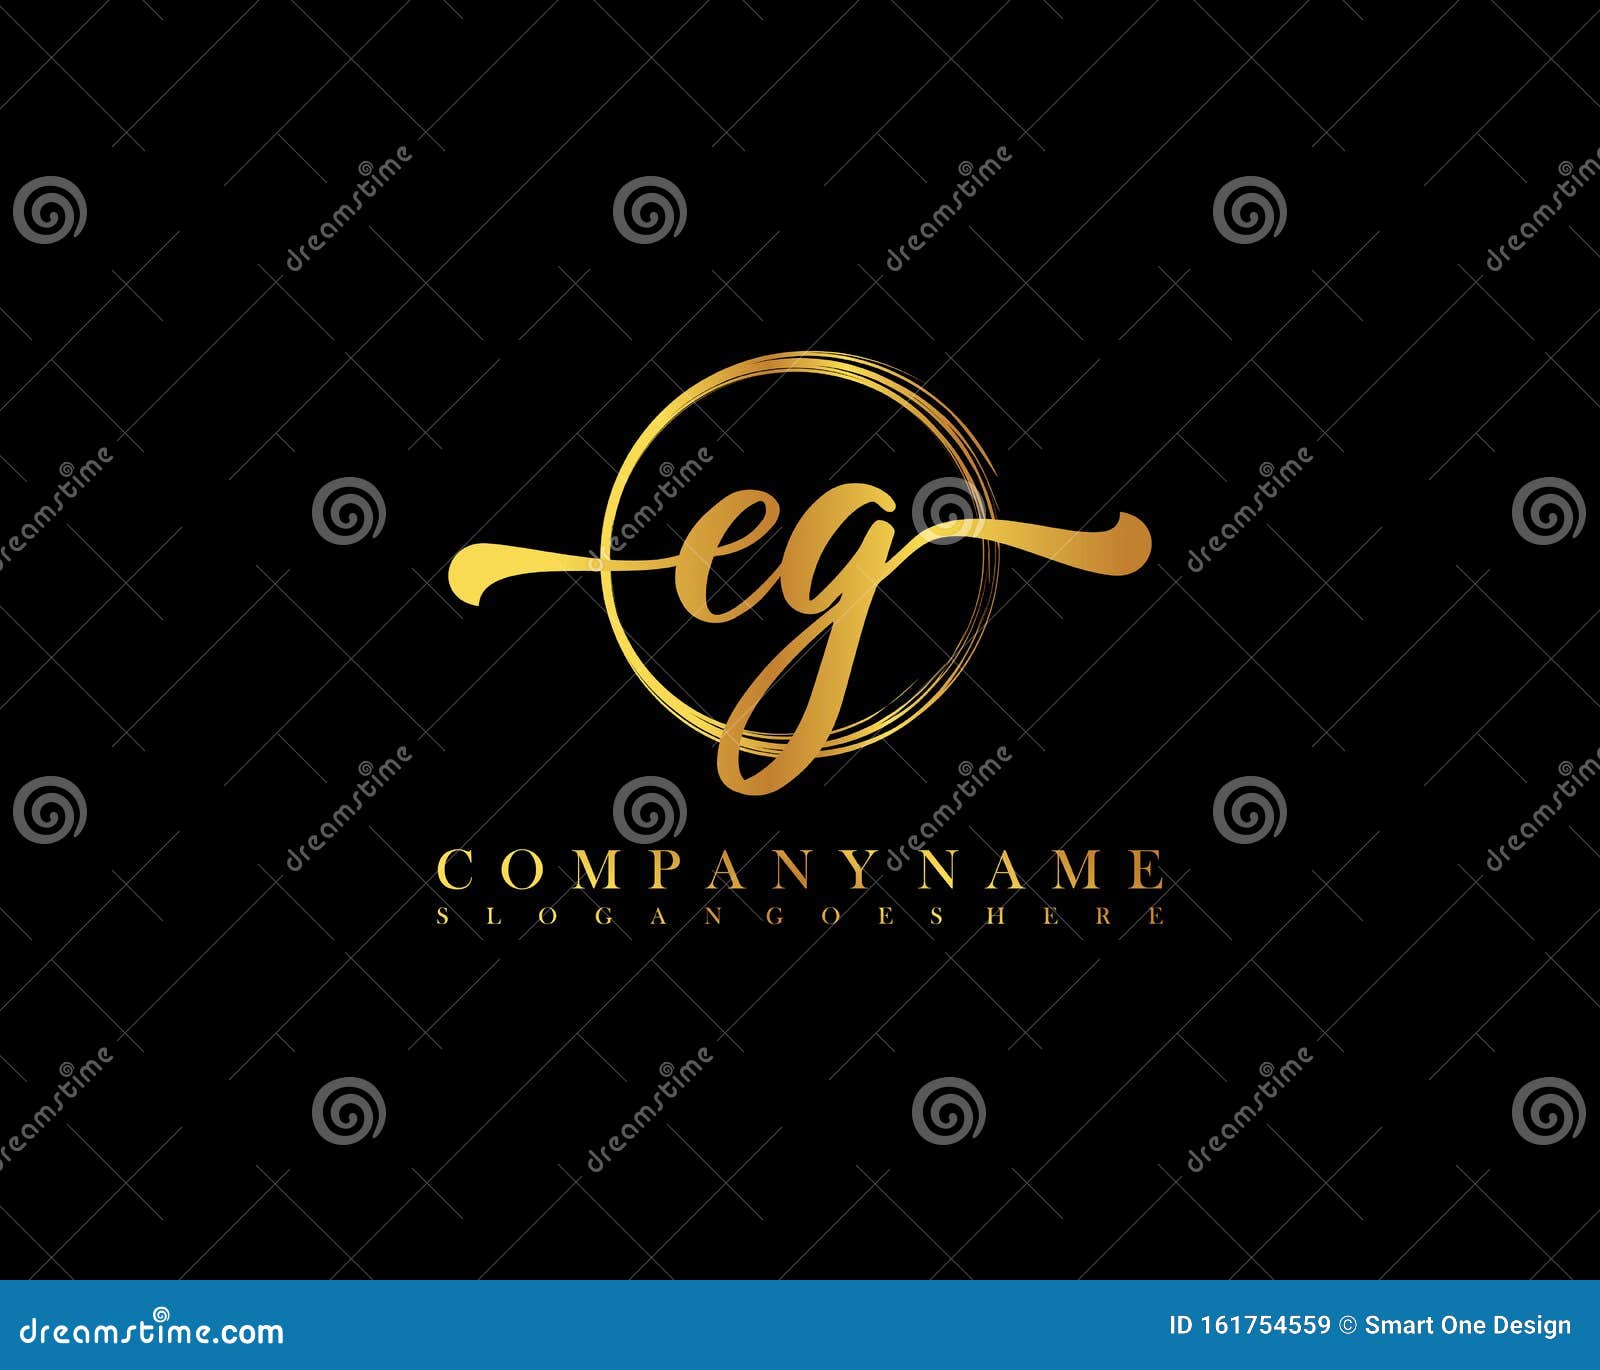 Eg Initial Handwriting Logo Circle Hand Drawn Template Vector Stock Vector Illustration Of Banner Creative